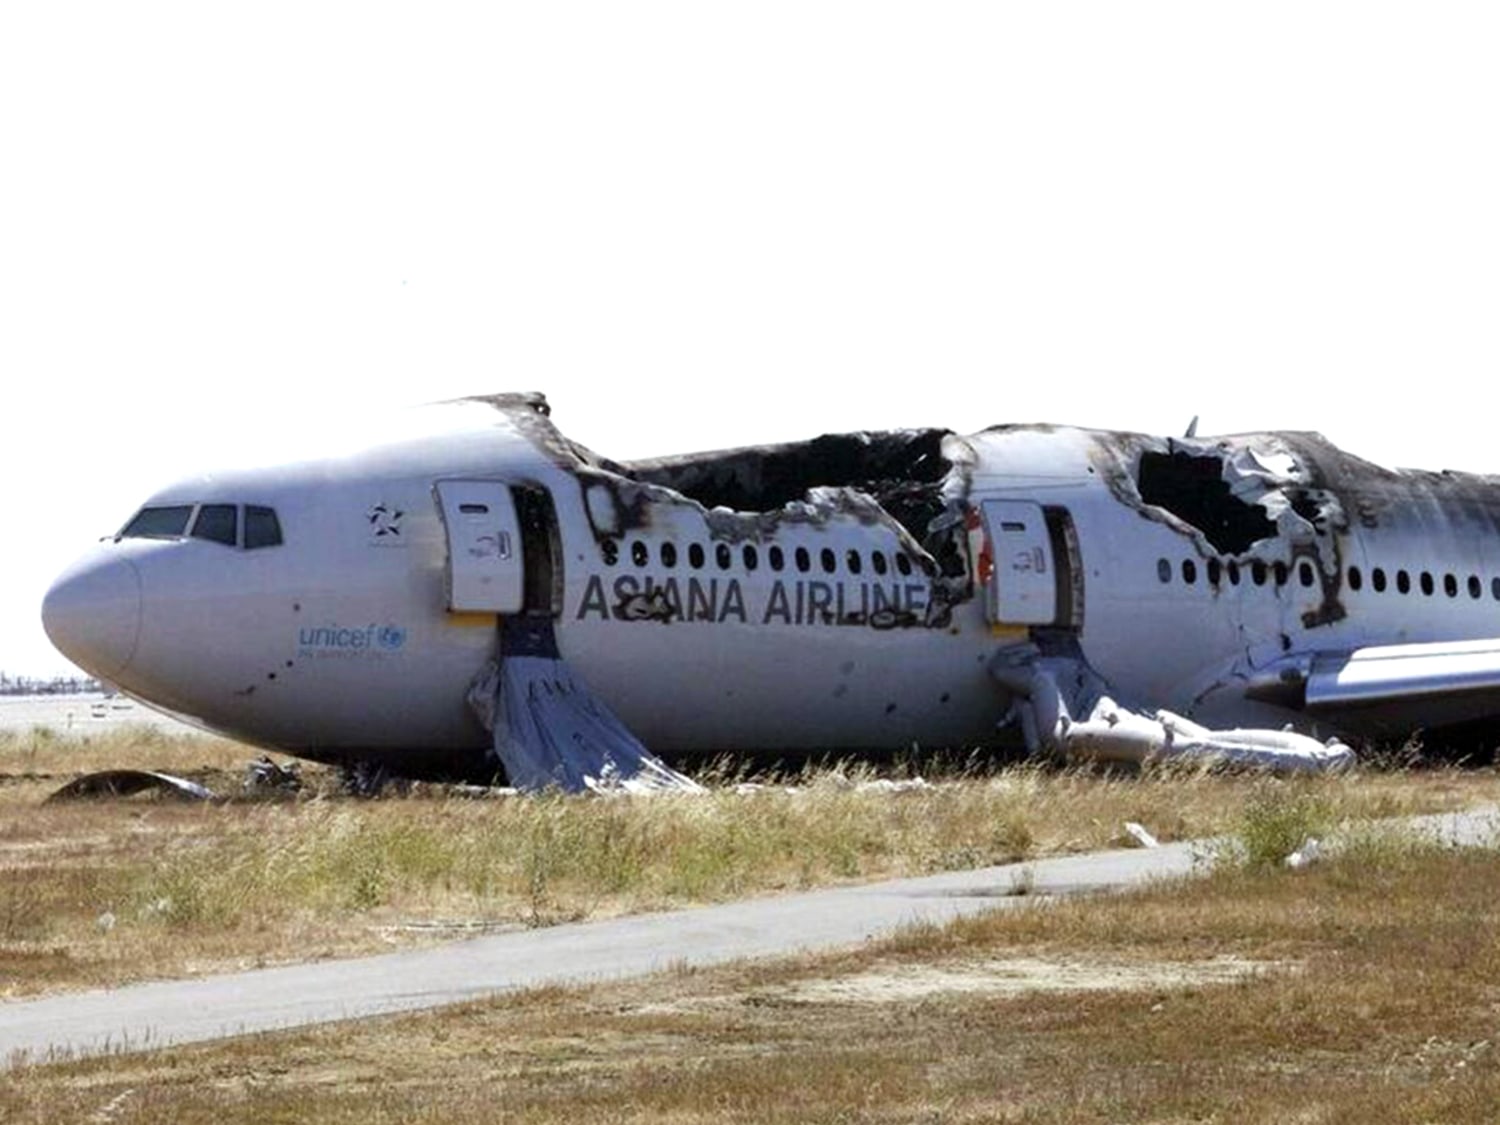 911 calls detail horror of San Francisco plane crash